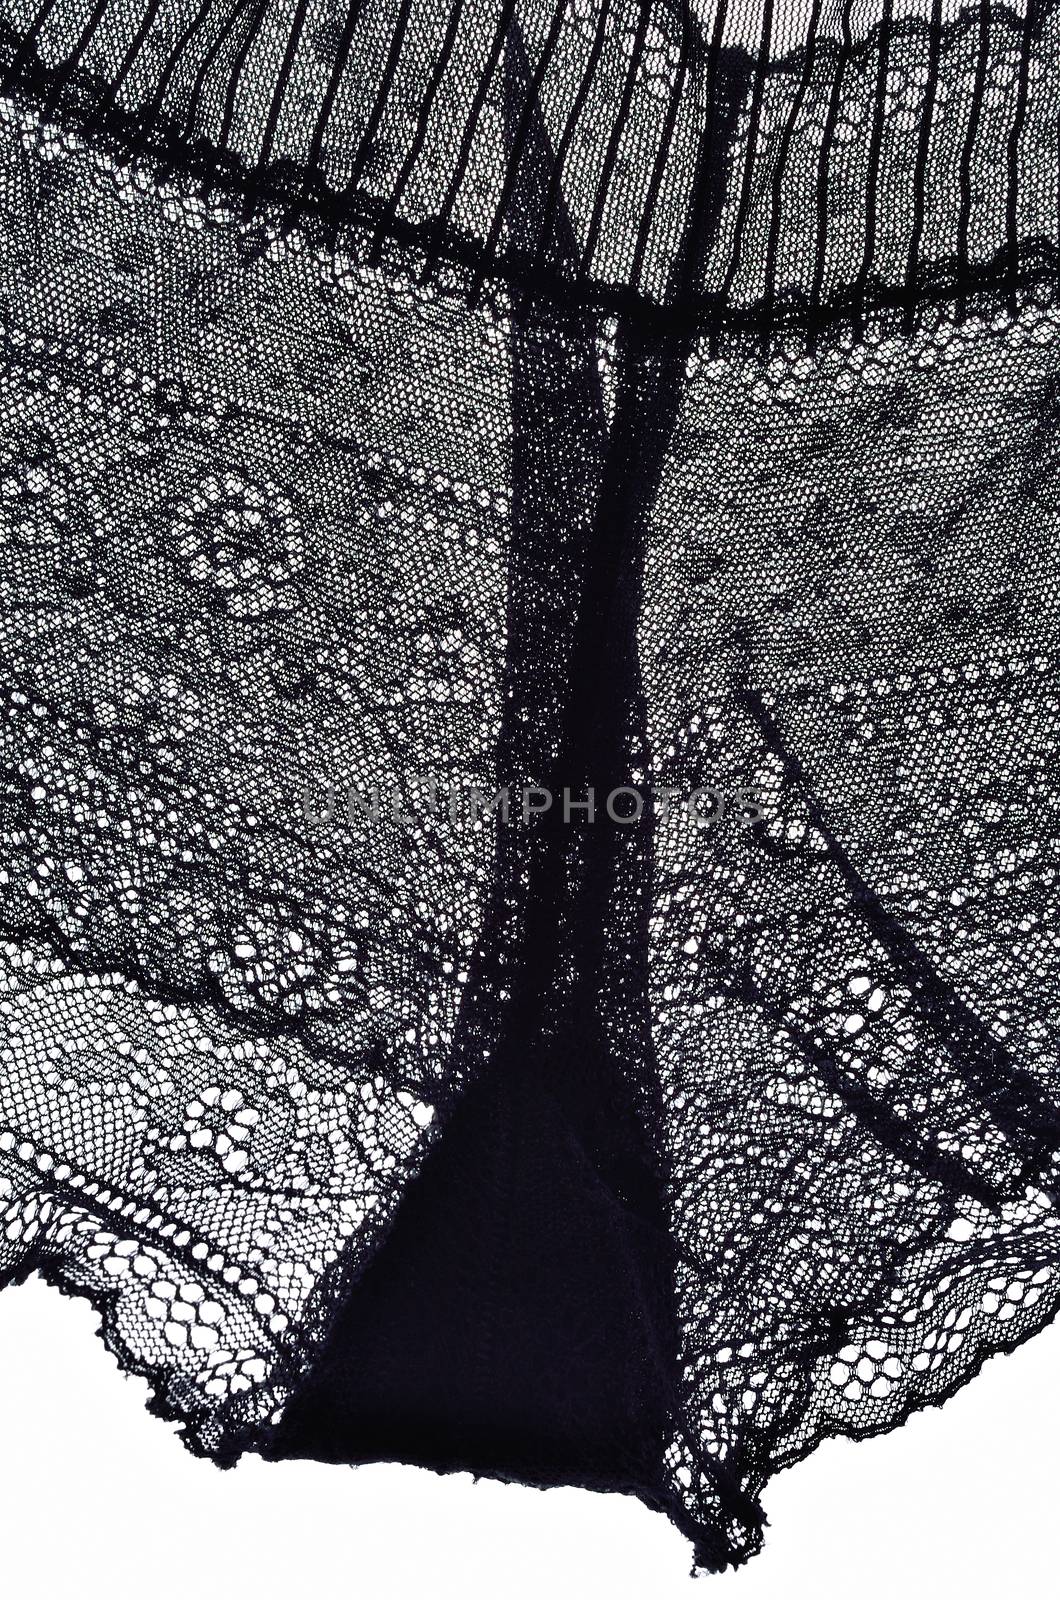 Female black lace panties isolated on white background